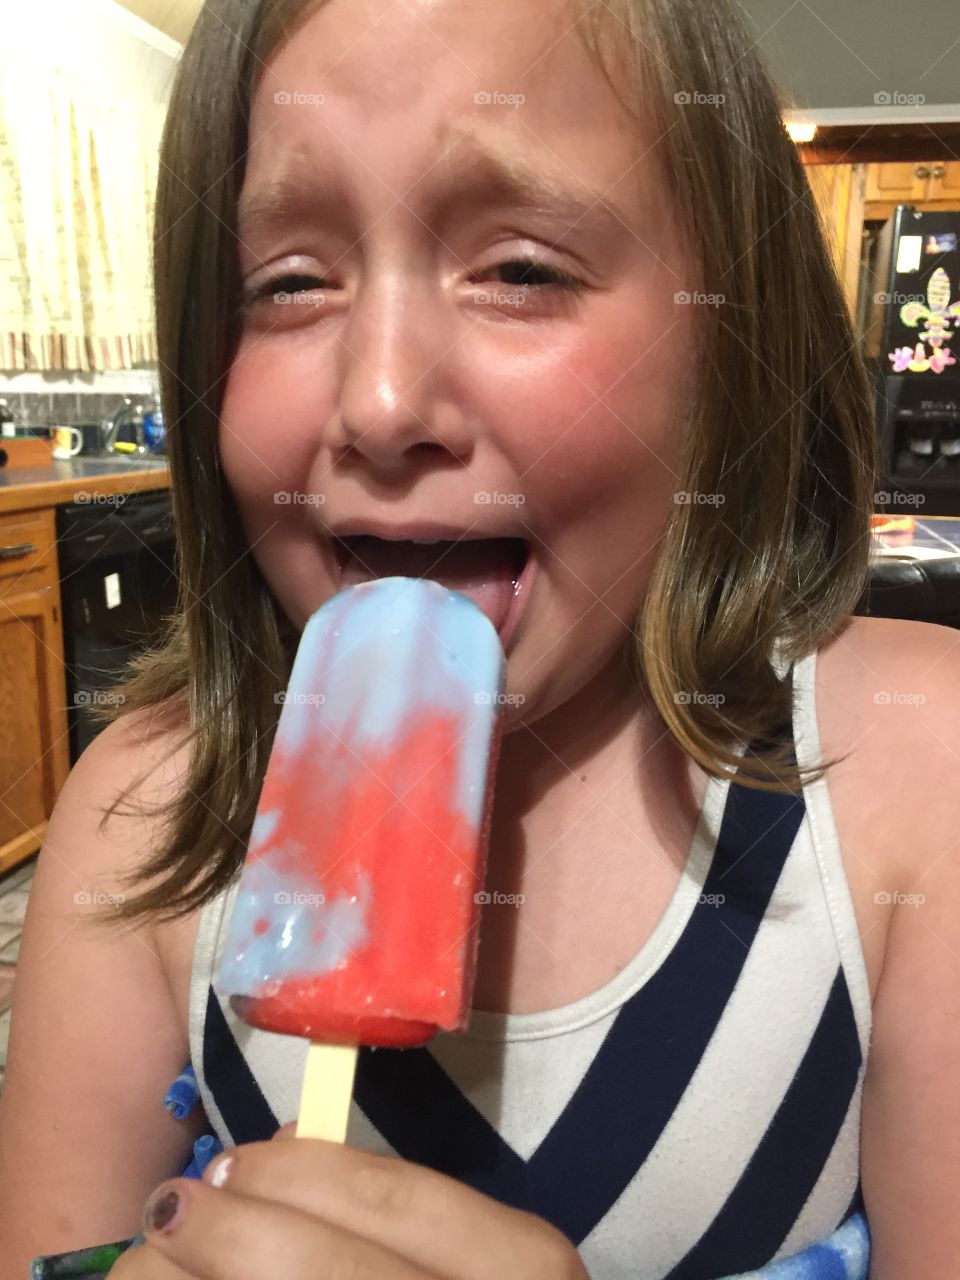 Ice cream stuck on tongue 